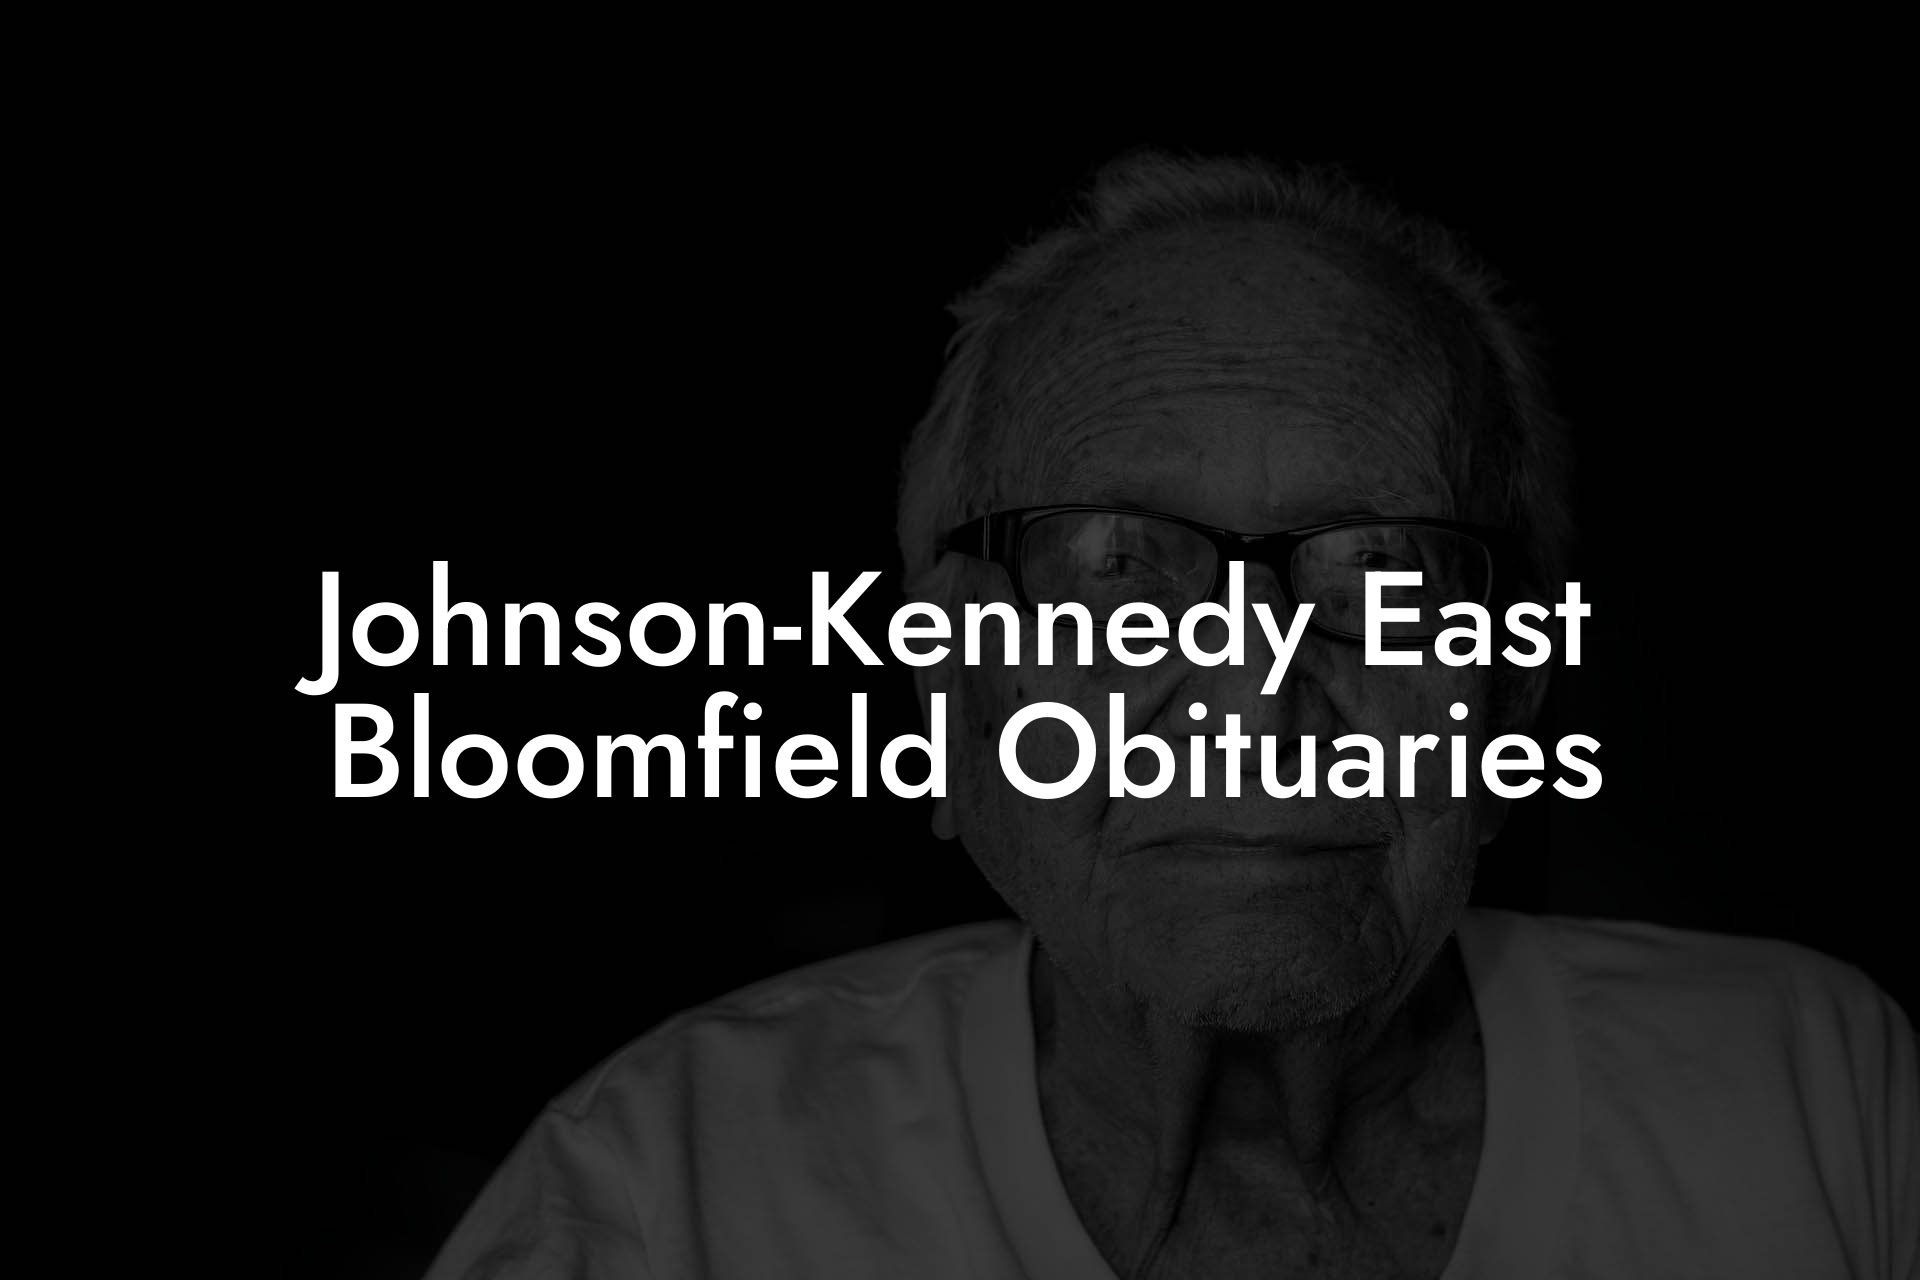 Johnson-Kennedy East Bloomfield Obituaries